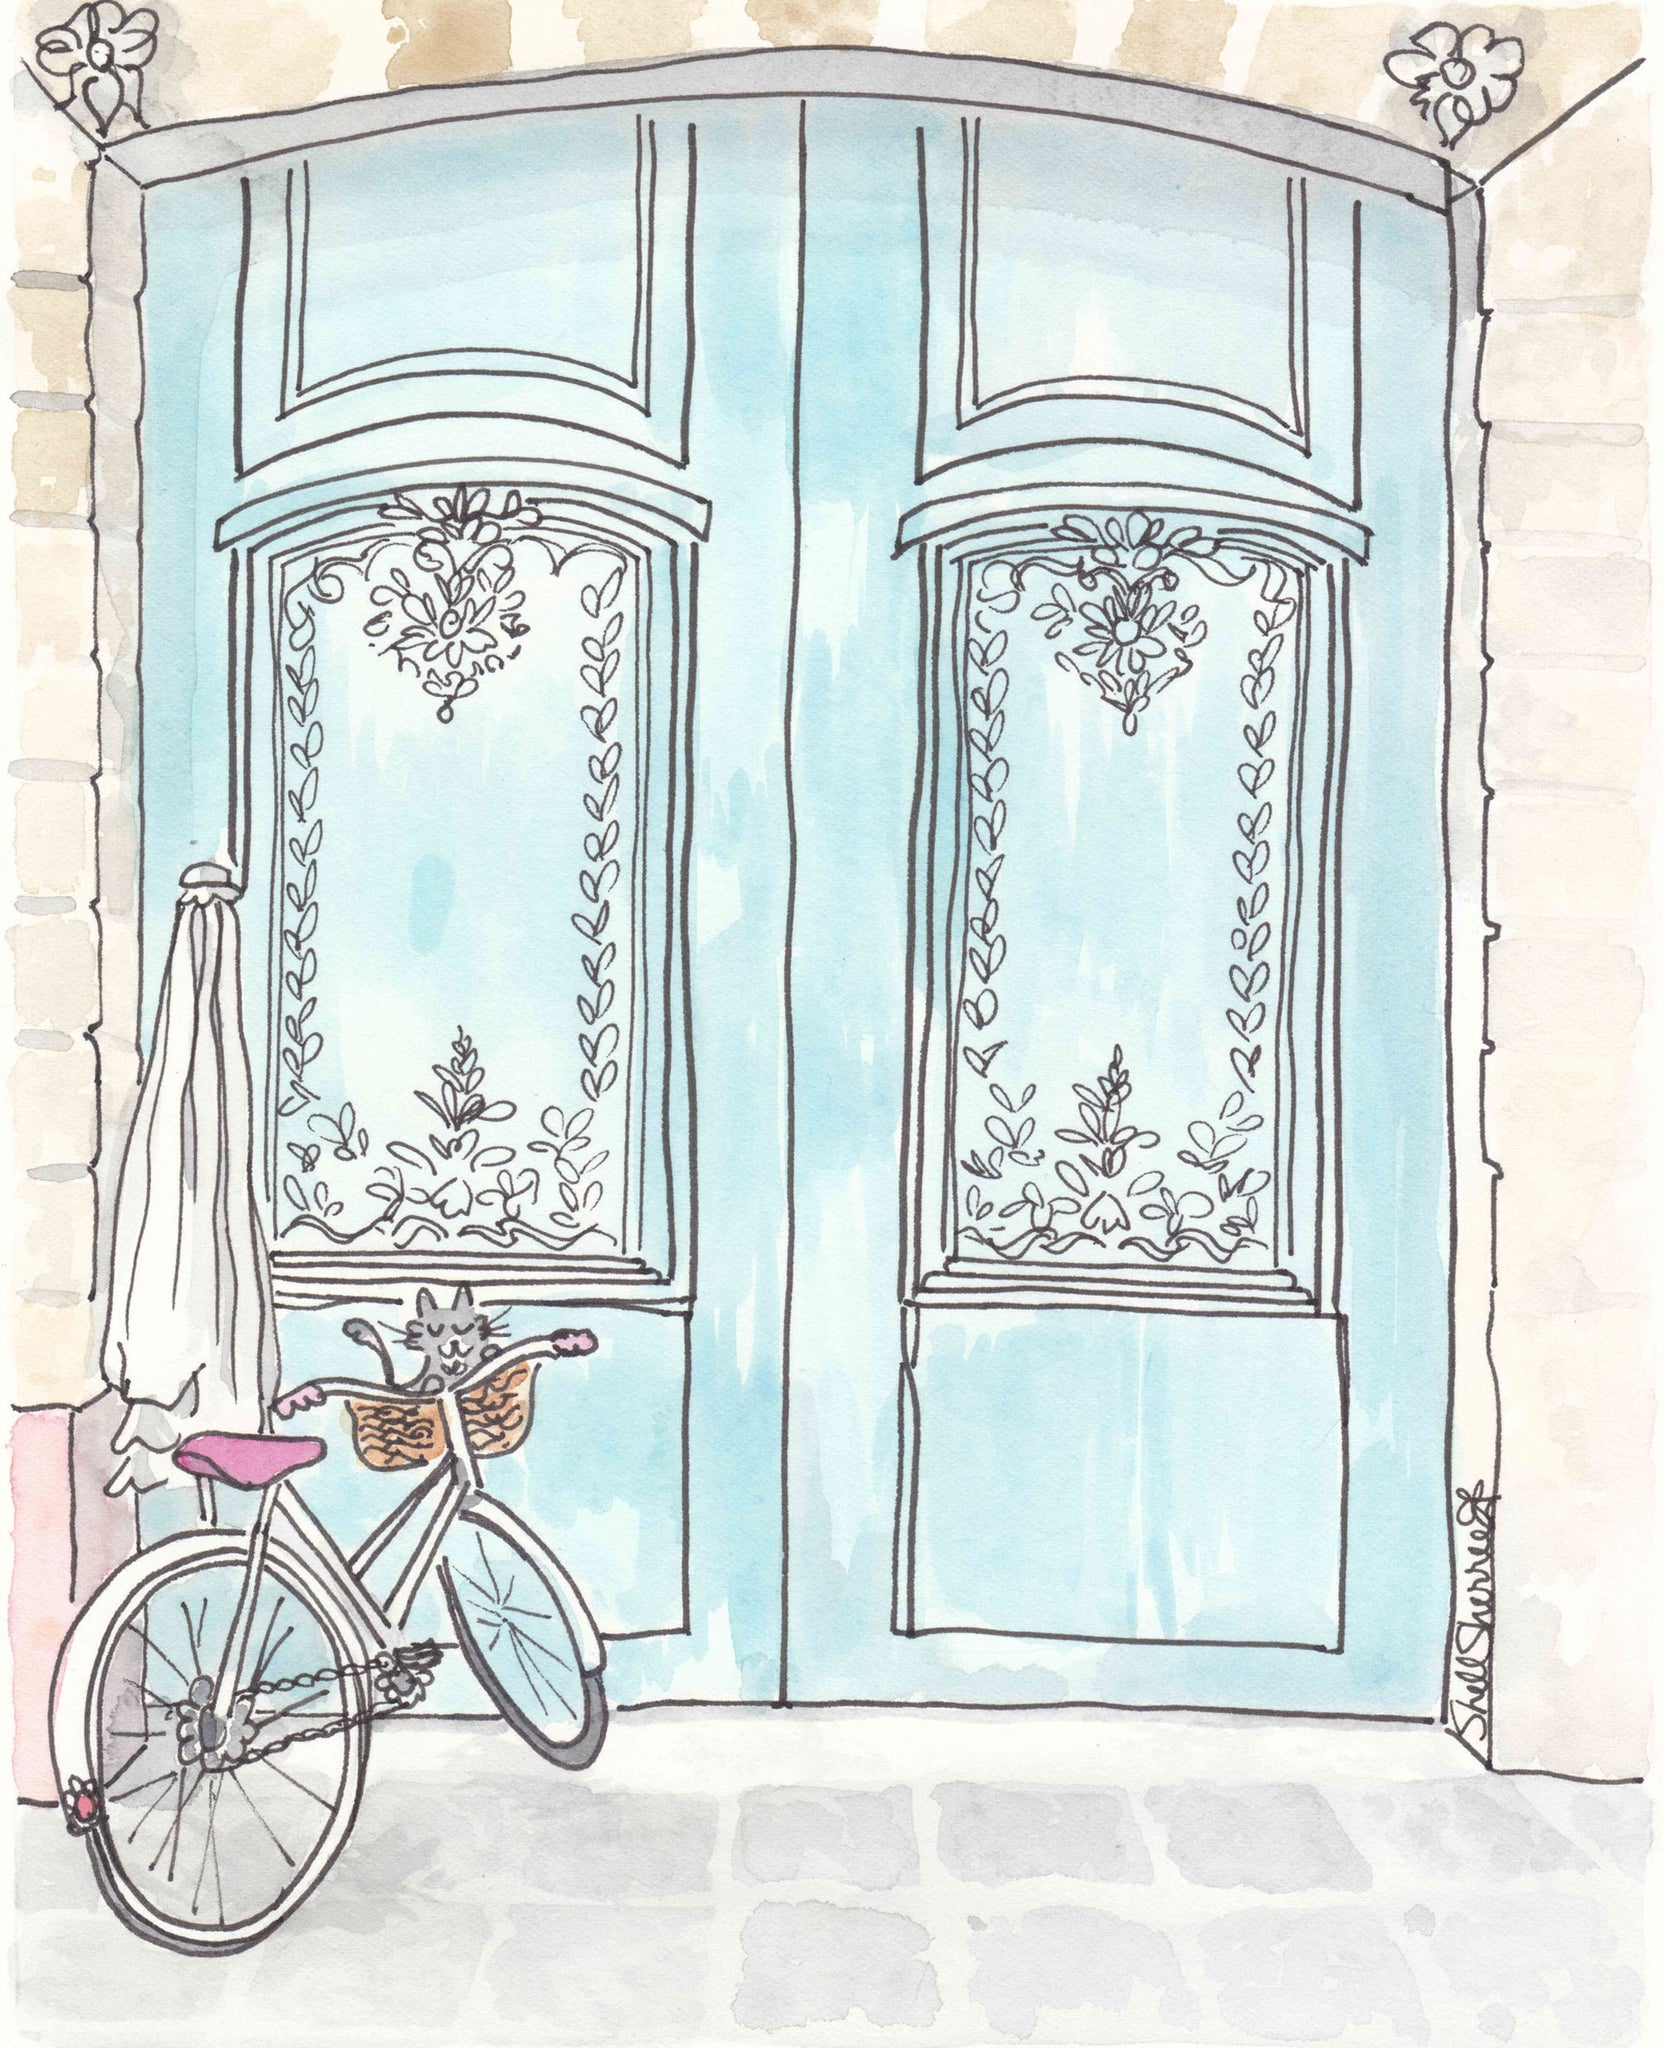 paris print aqua doors bicycle and cat by shell sherree